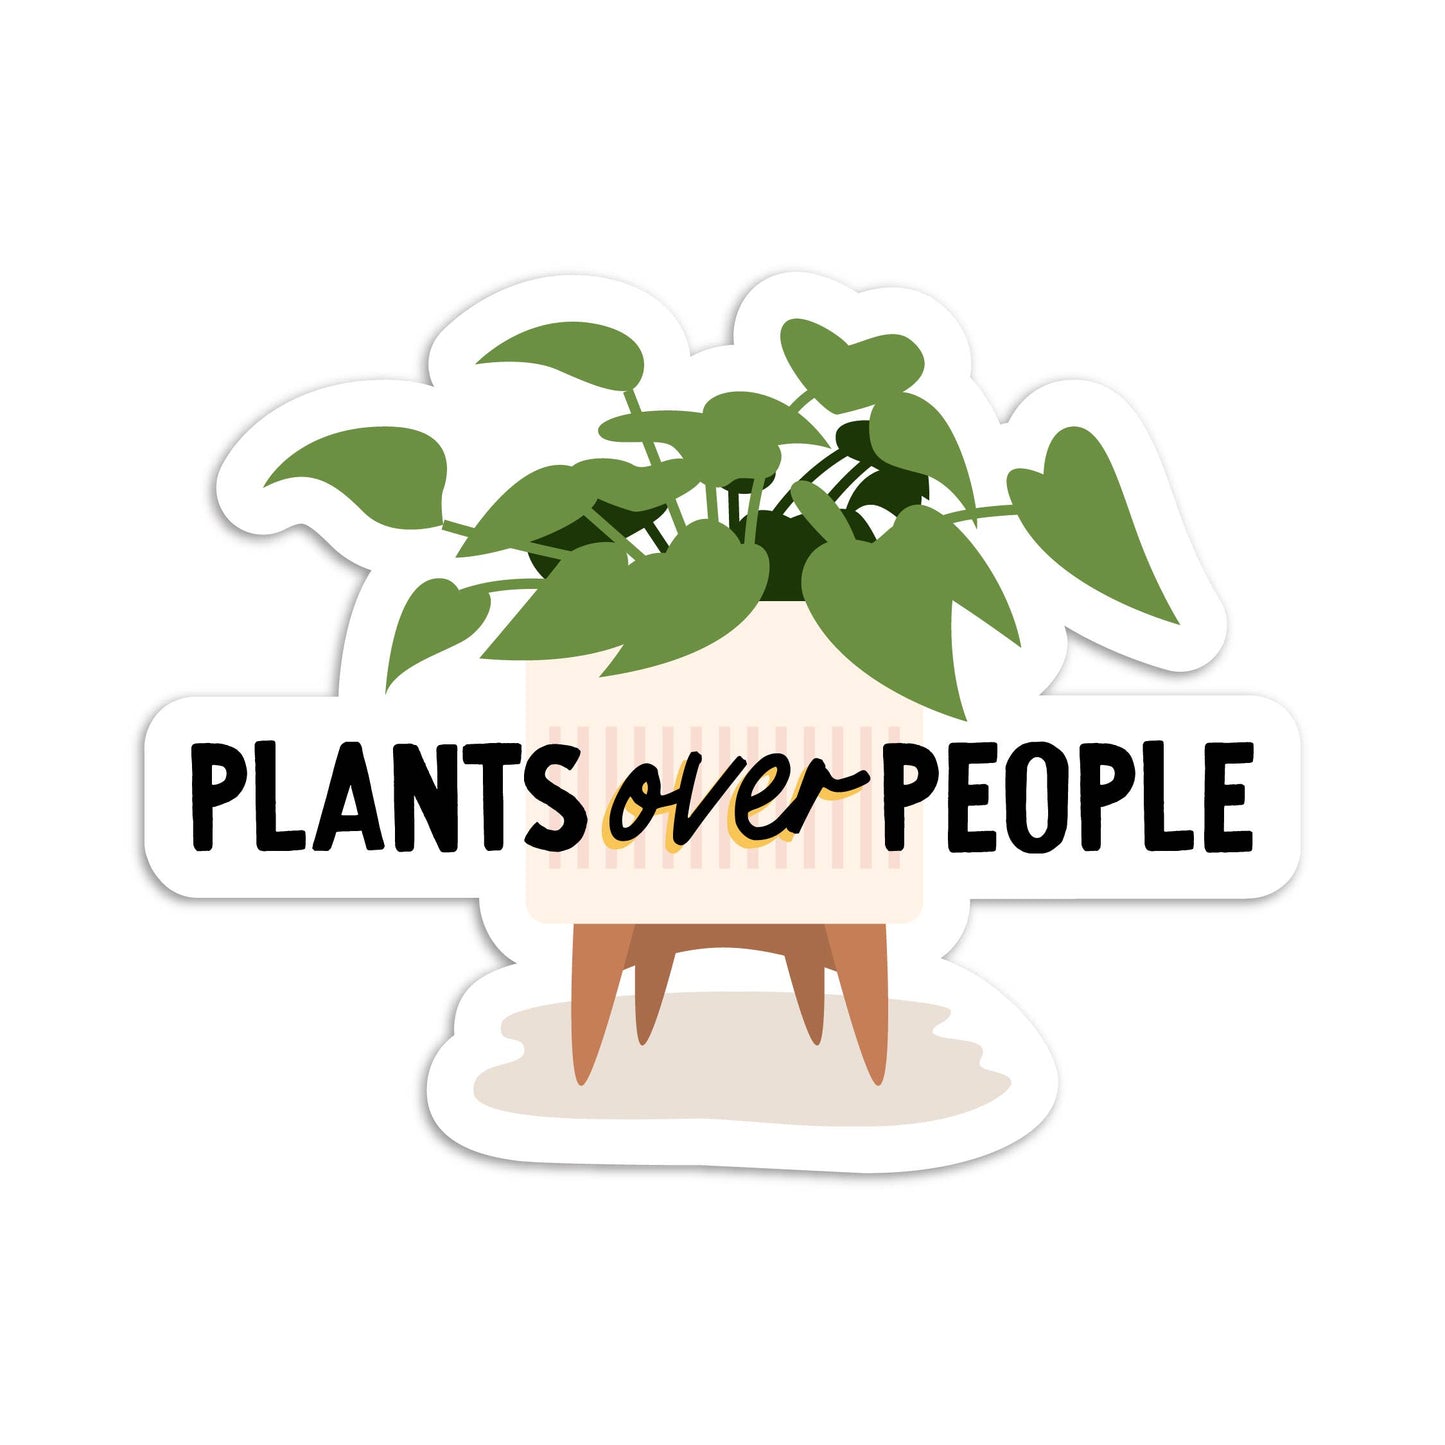 Plants over people vinyl sticker